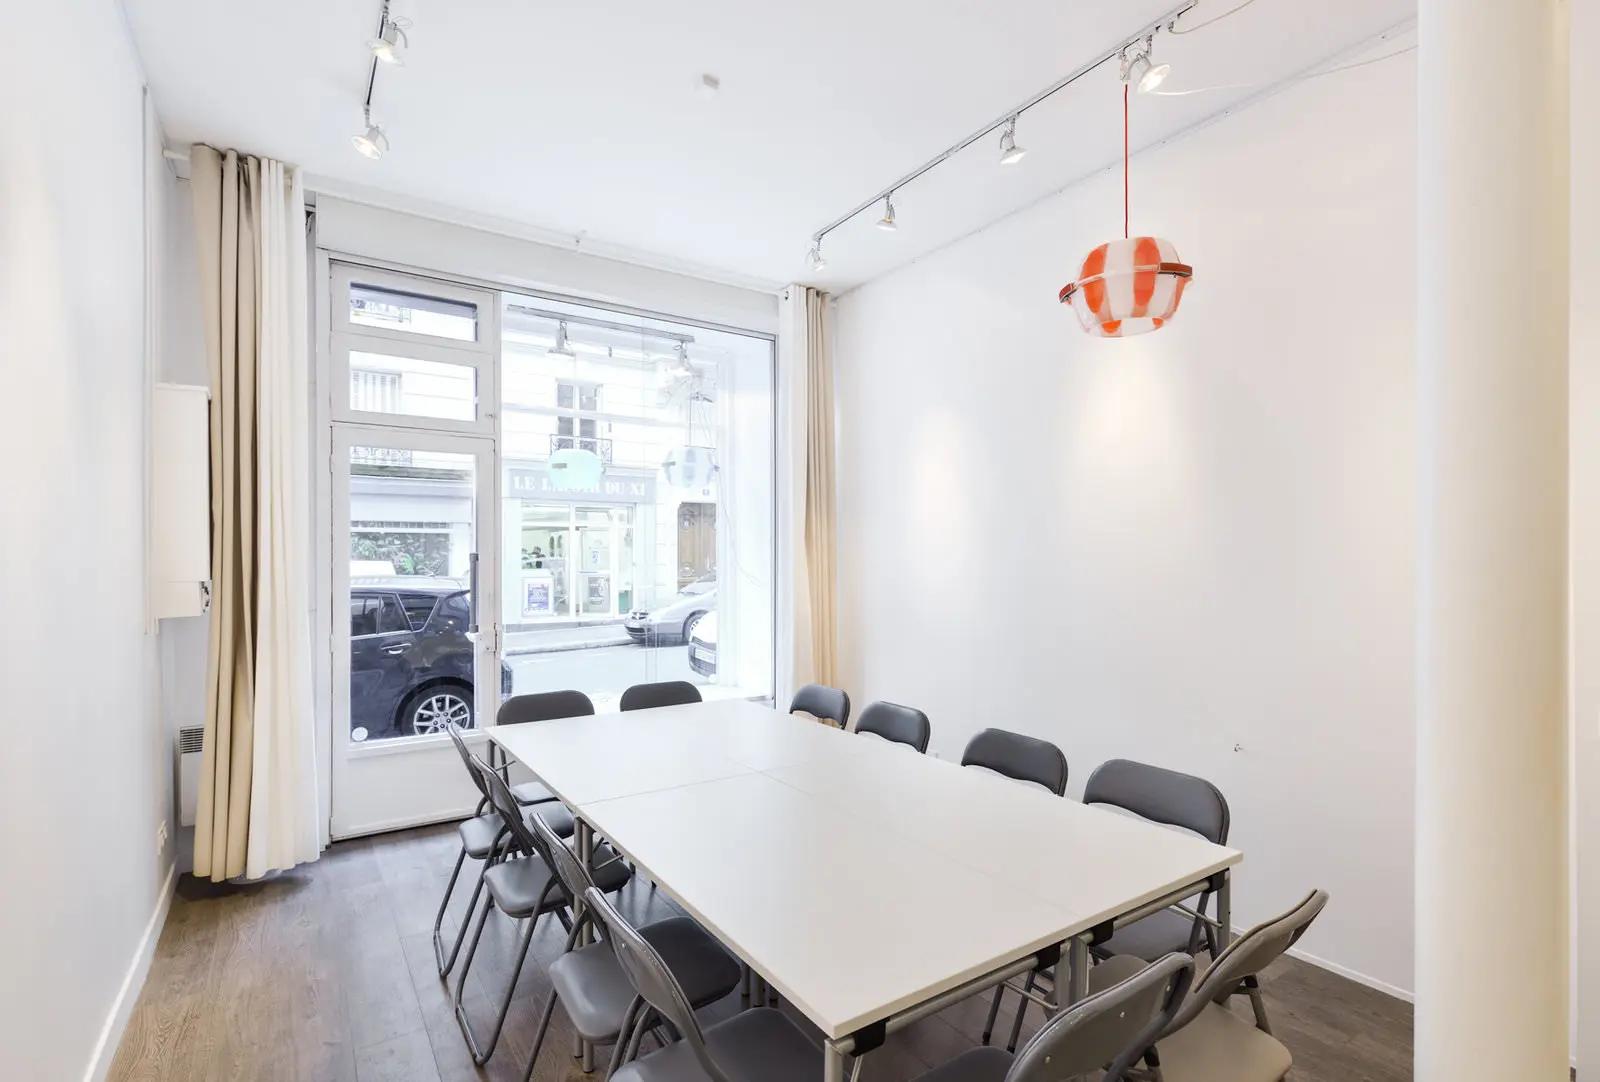 Meeting room in Modular, functional space - 0